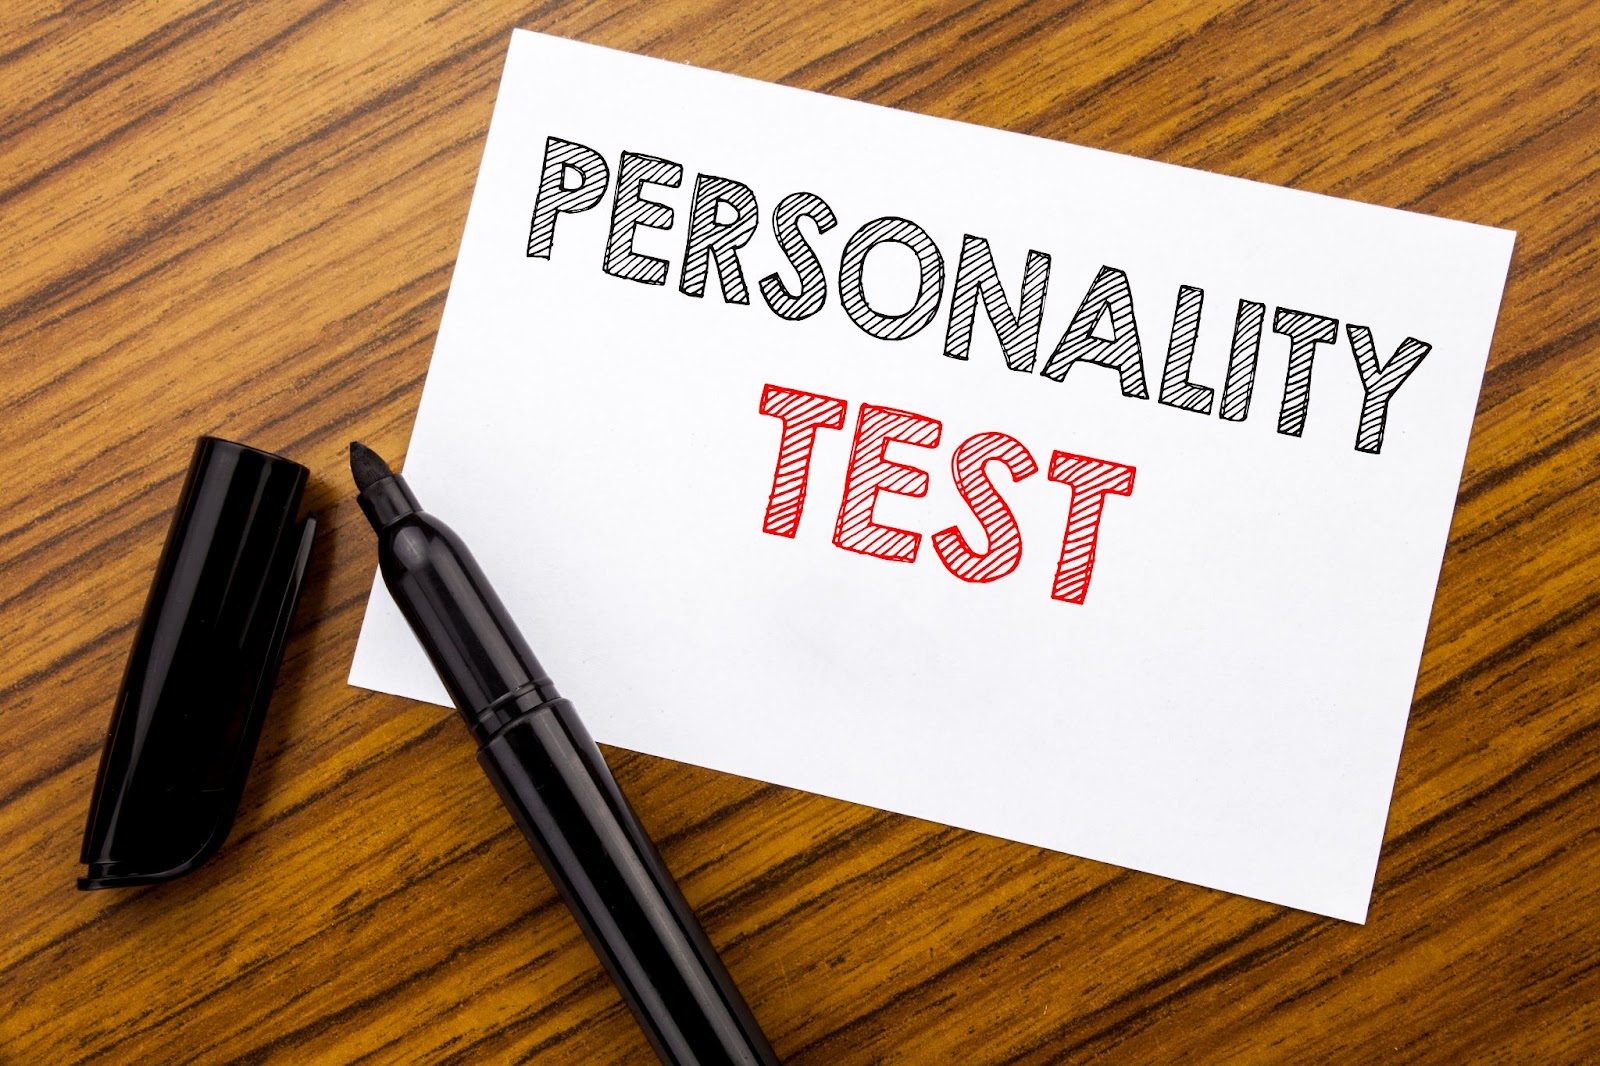 Personality Test webinar software